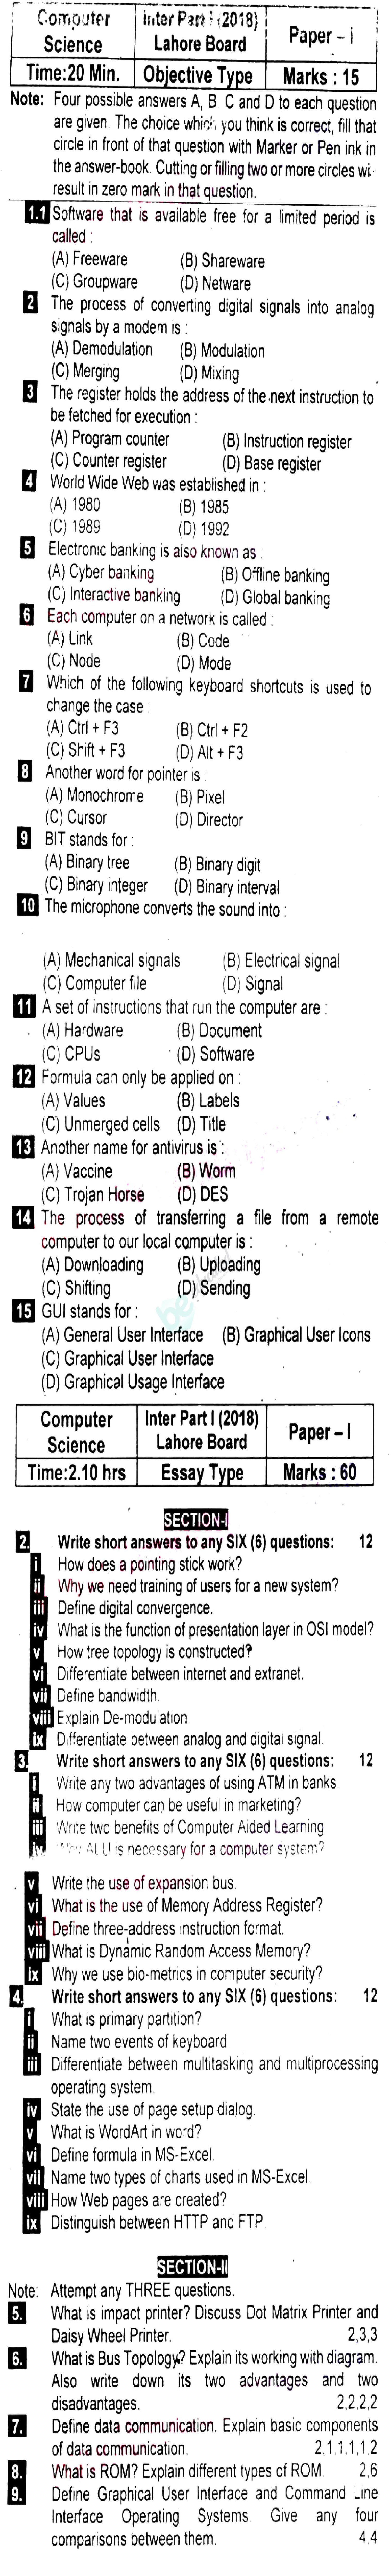 Computer Science ICS Part 1 Past Paper Group 1 BISE Lahore 2018